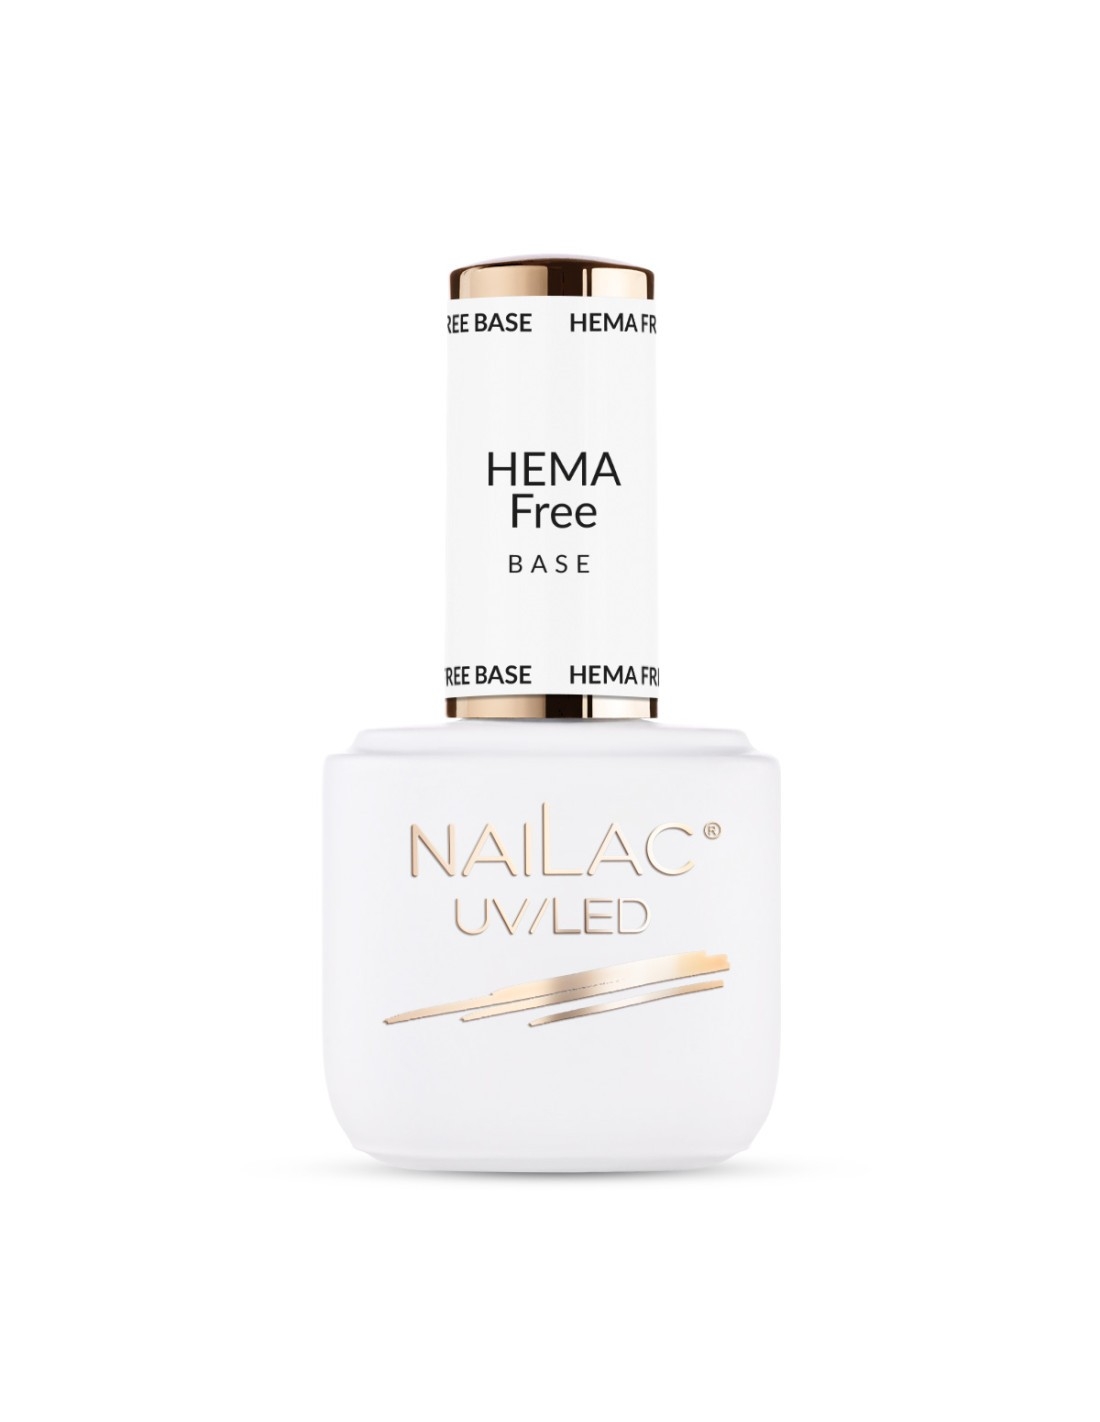 Hema Free Hybrid base coat NaiLac 7ml